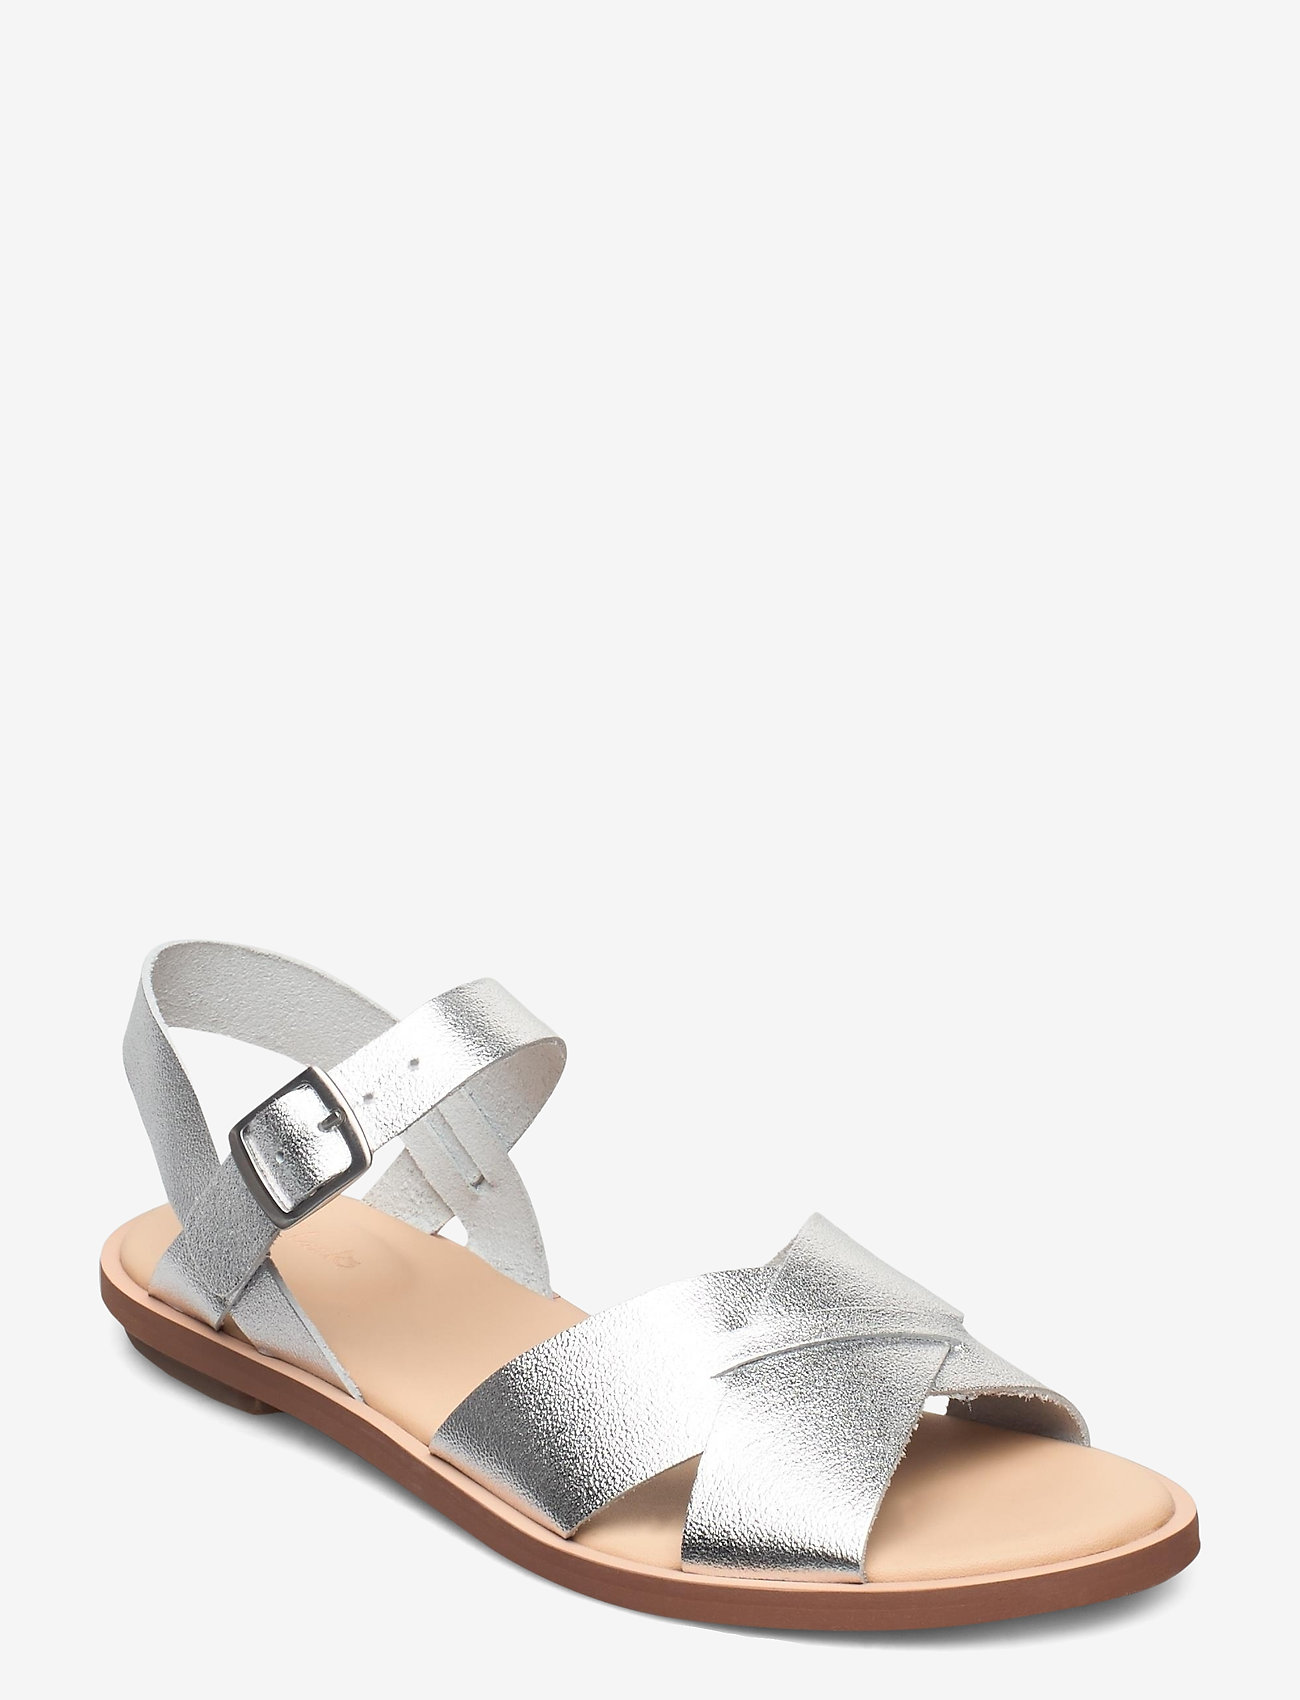 clarks sandals silver